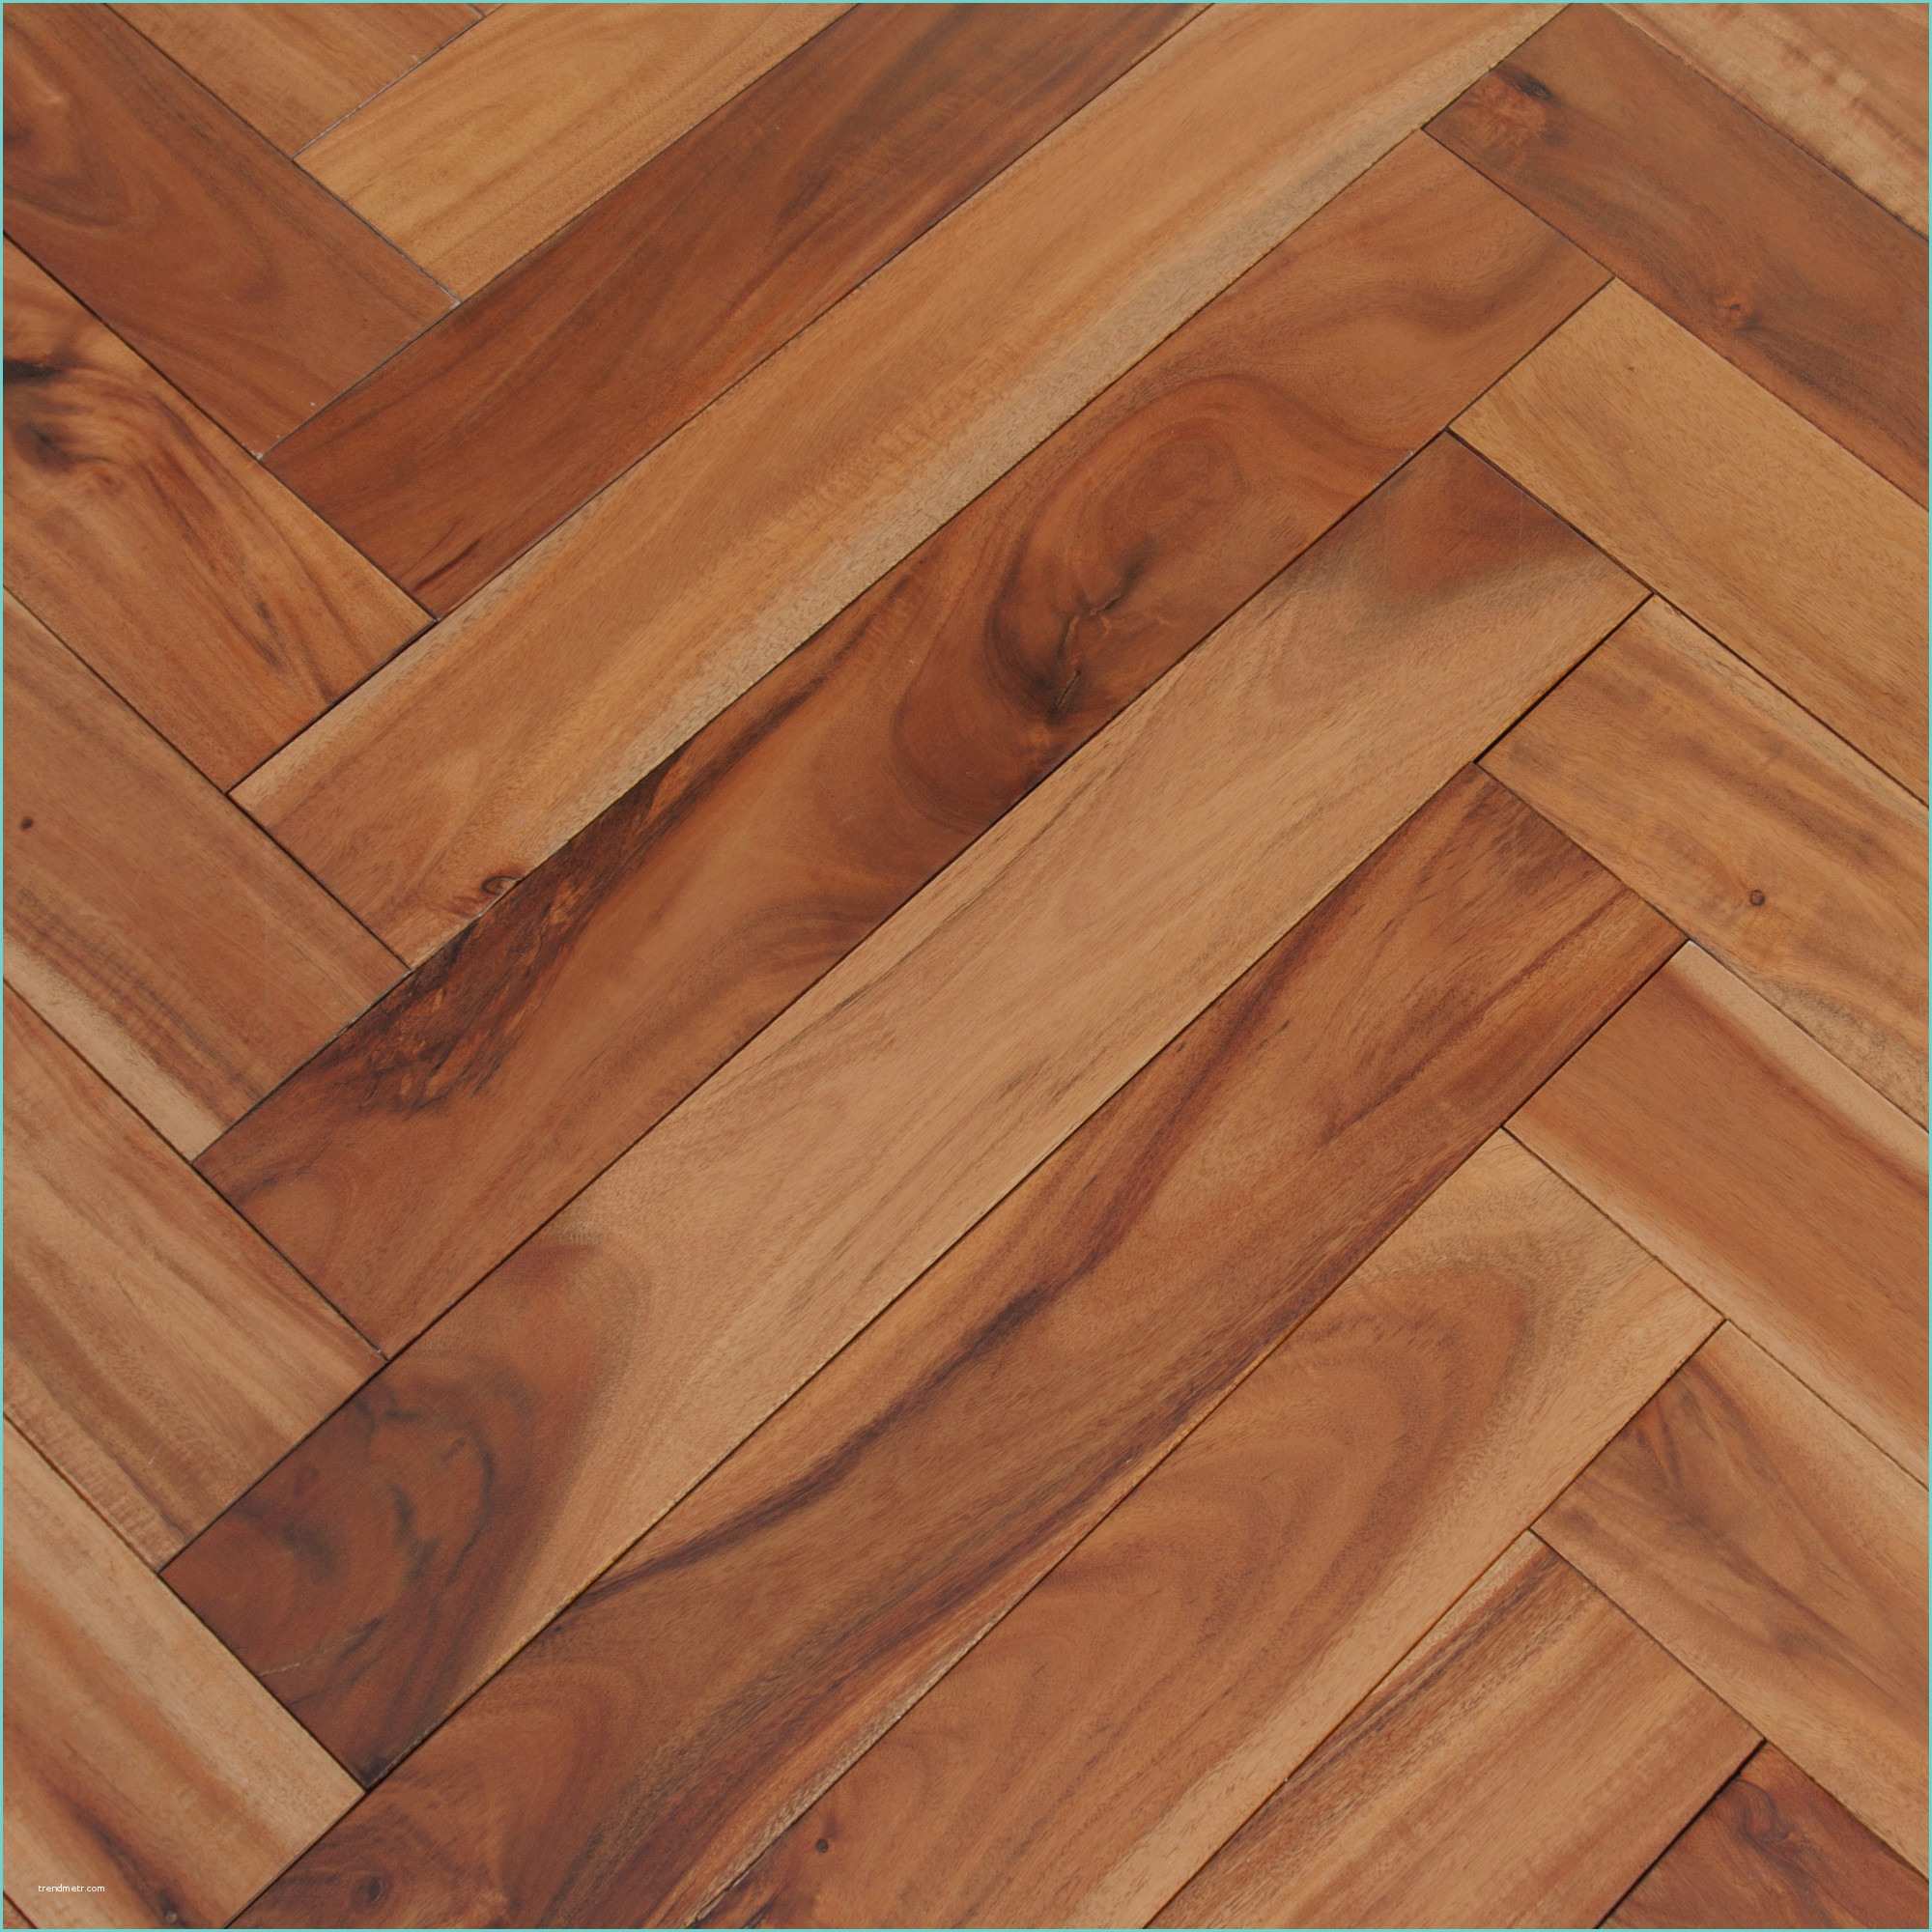 Herringbone Floors Pictures Acacia Bronze Herringbone Hardwood Flooring